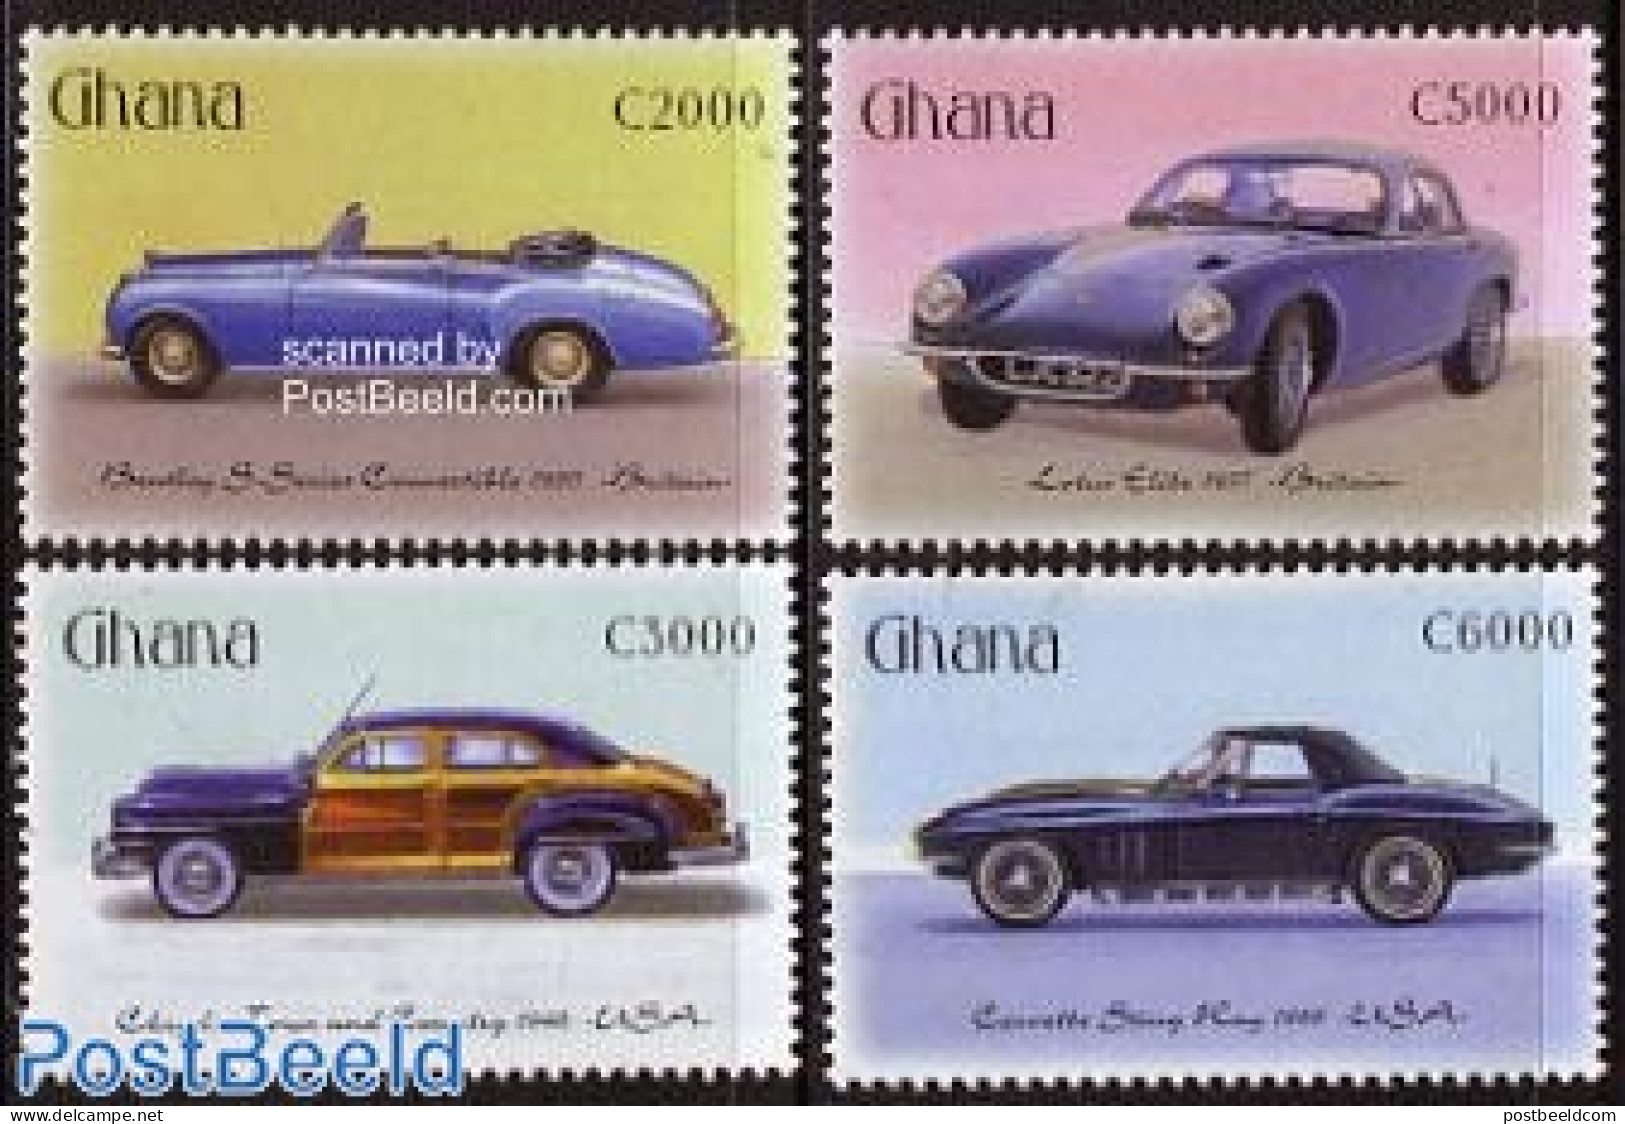 Ghana 2001 Automobiles 4v, Mint NH, Transport - Automobiles - Auto's